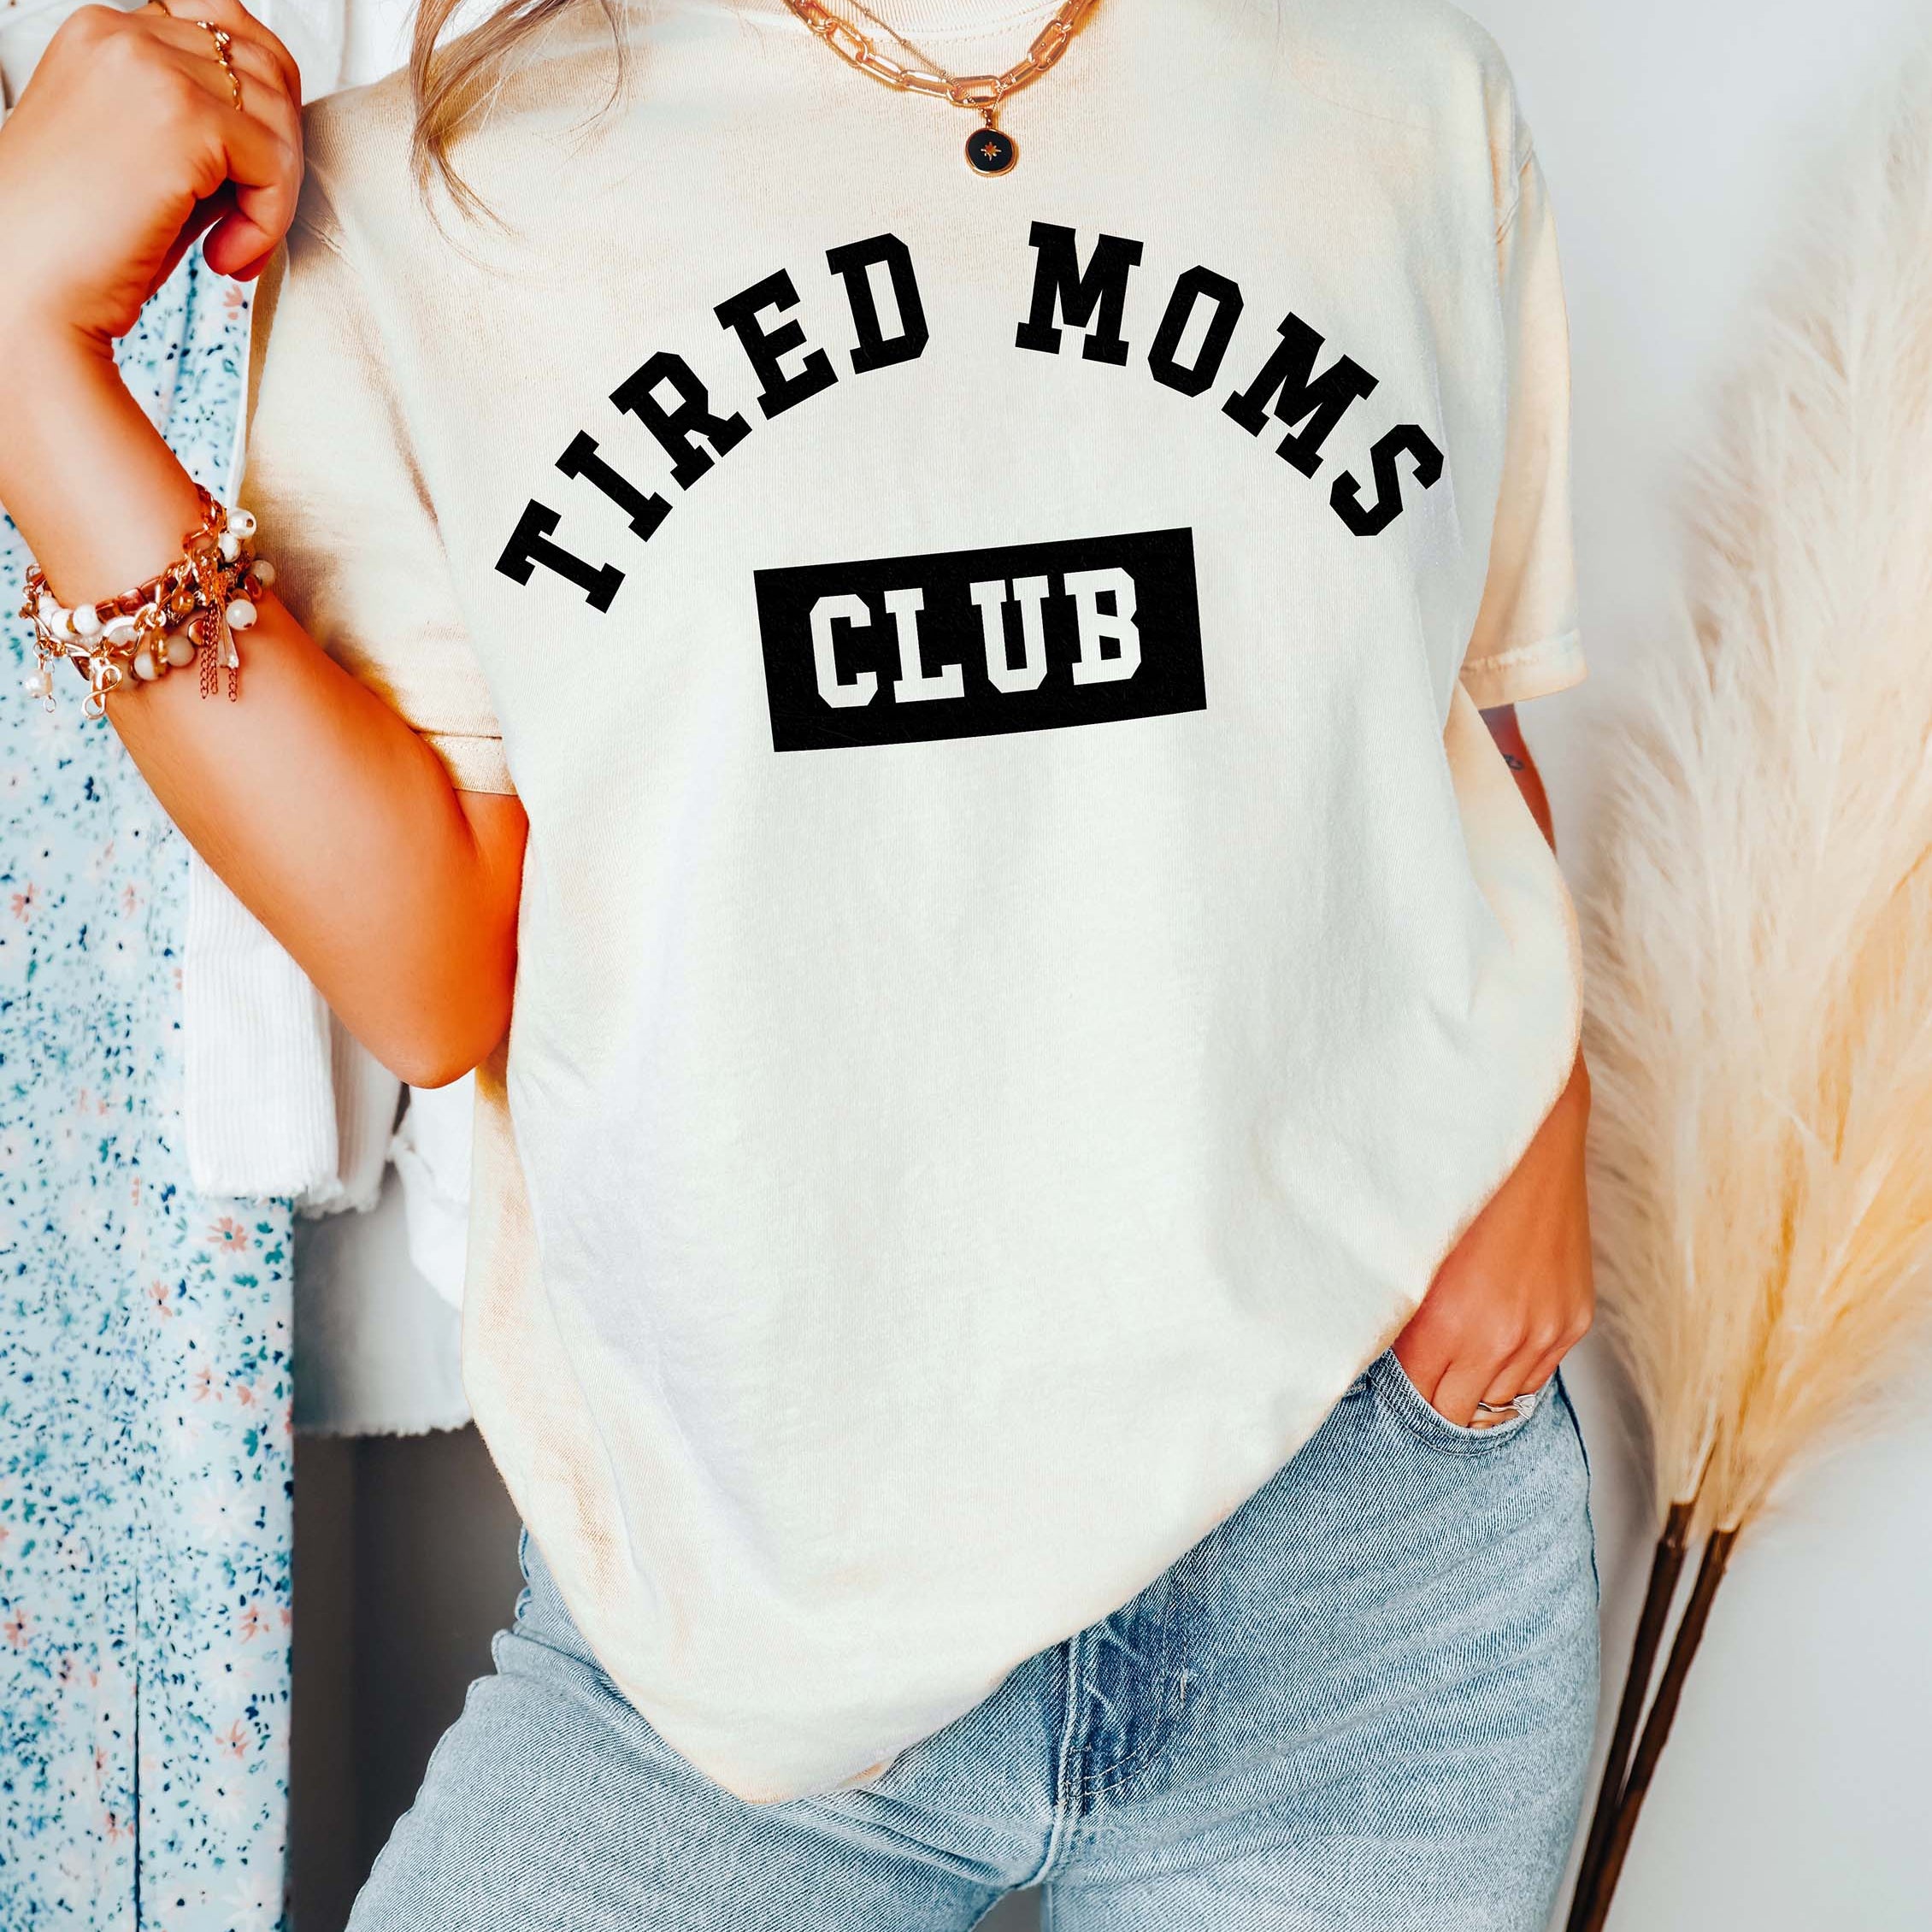 Tired Moms Club Tee